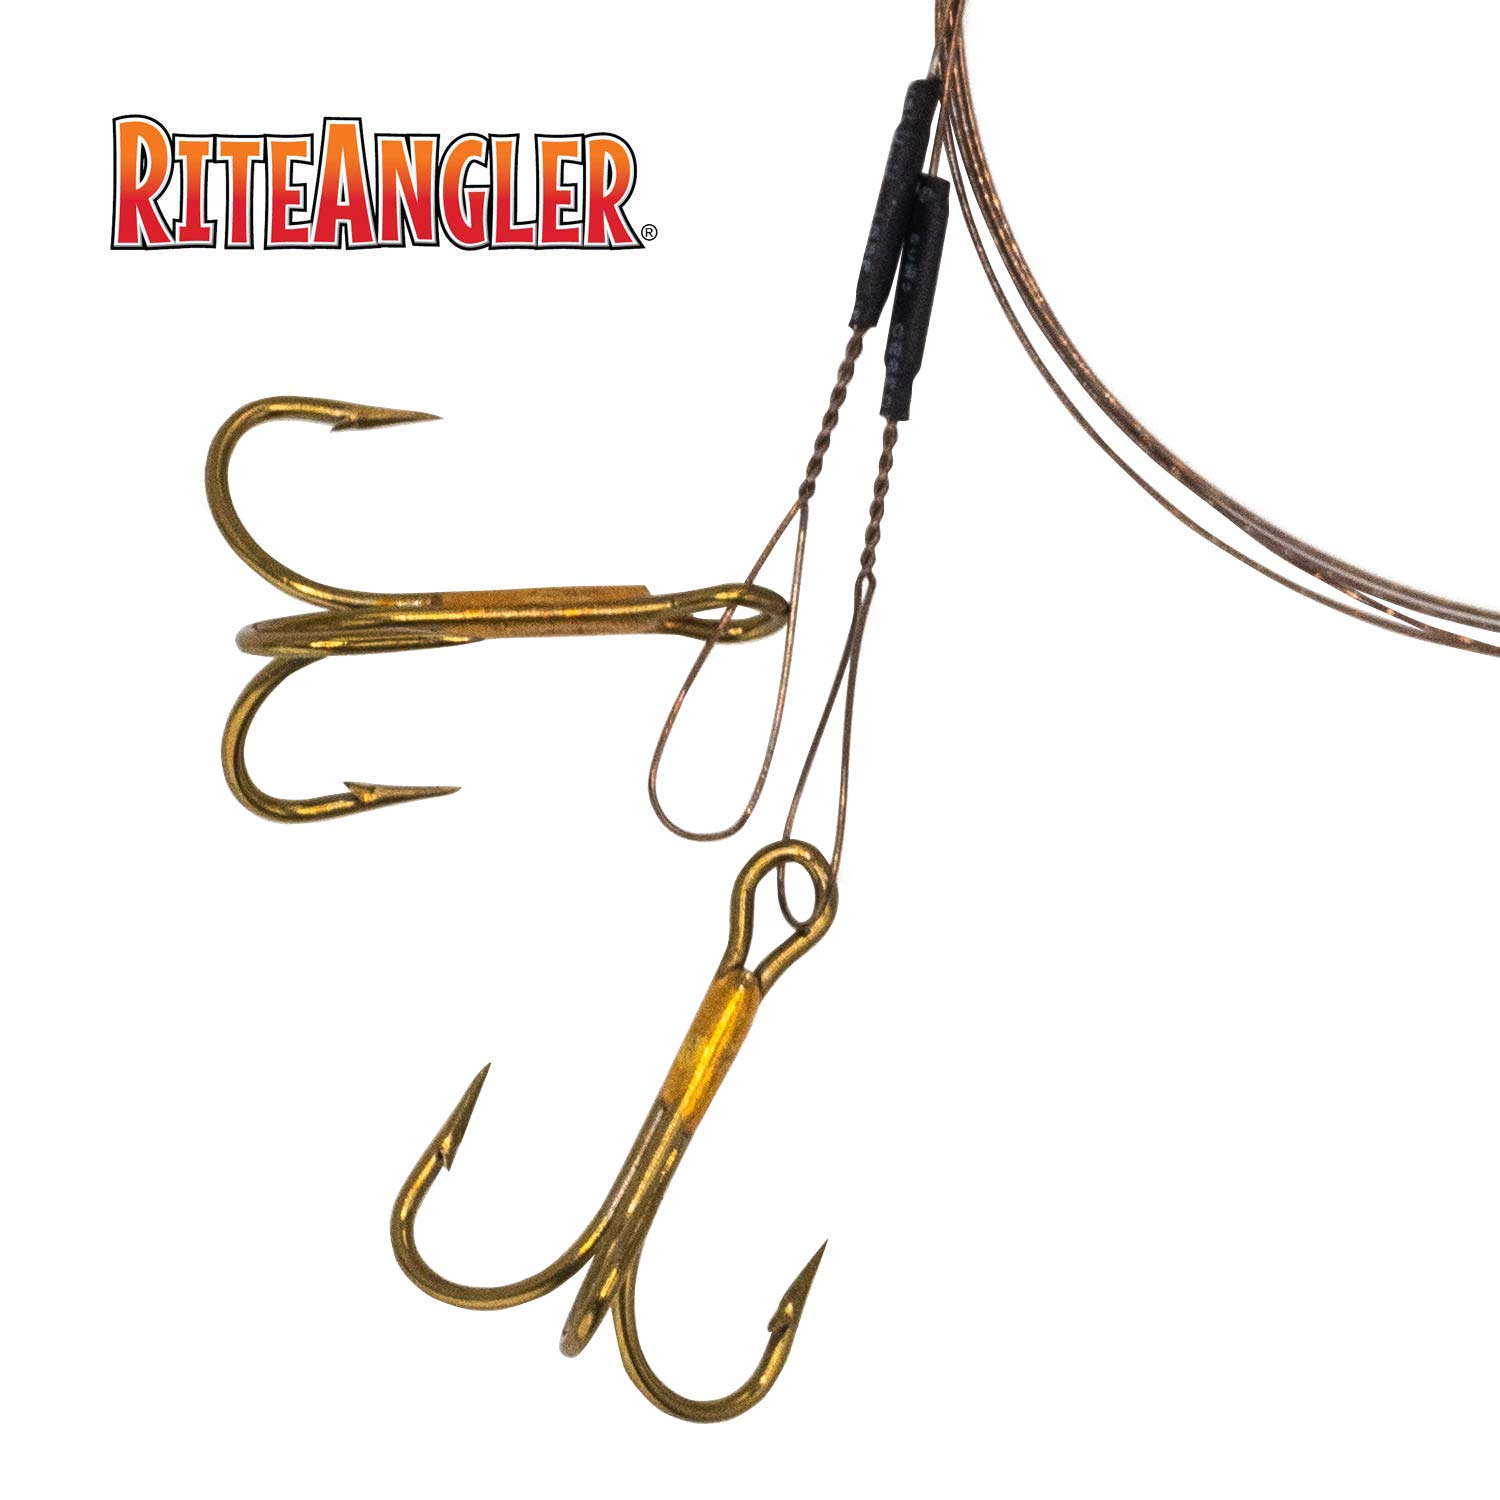 Rite Angler Kingfish Double Rig Treble Hooks